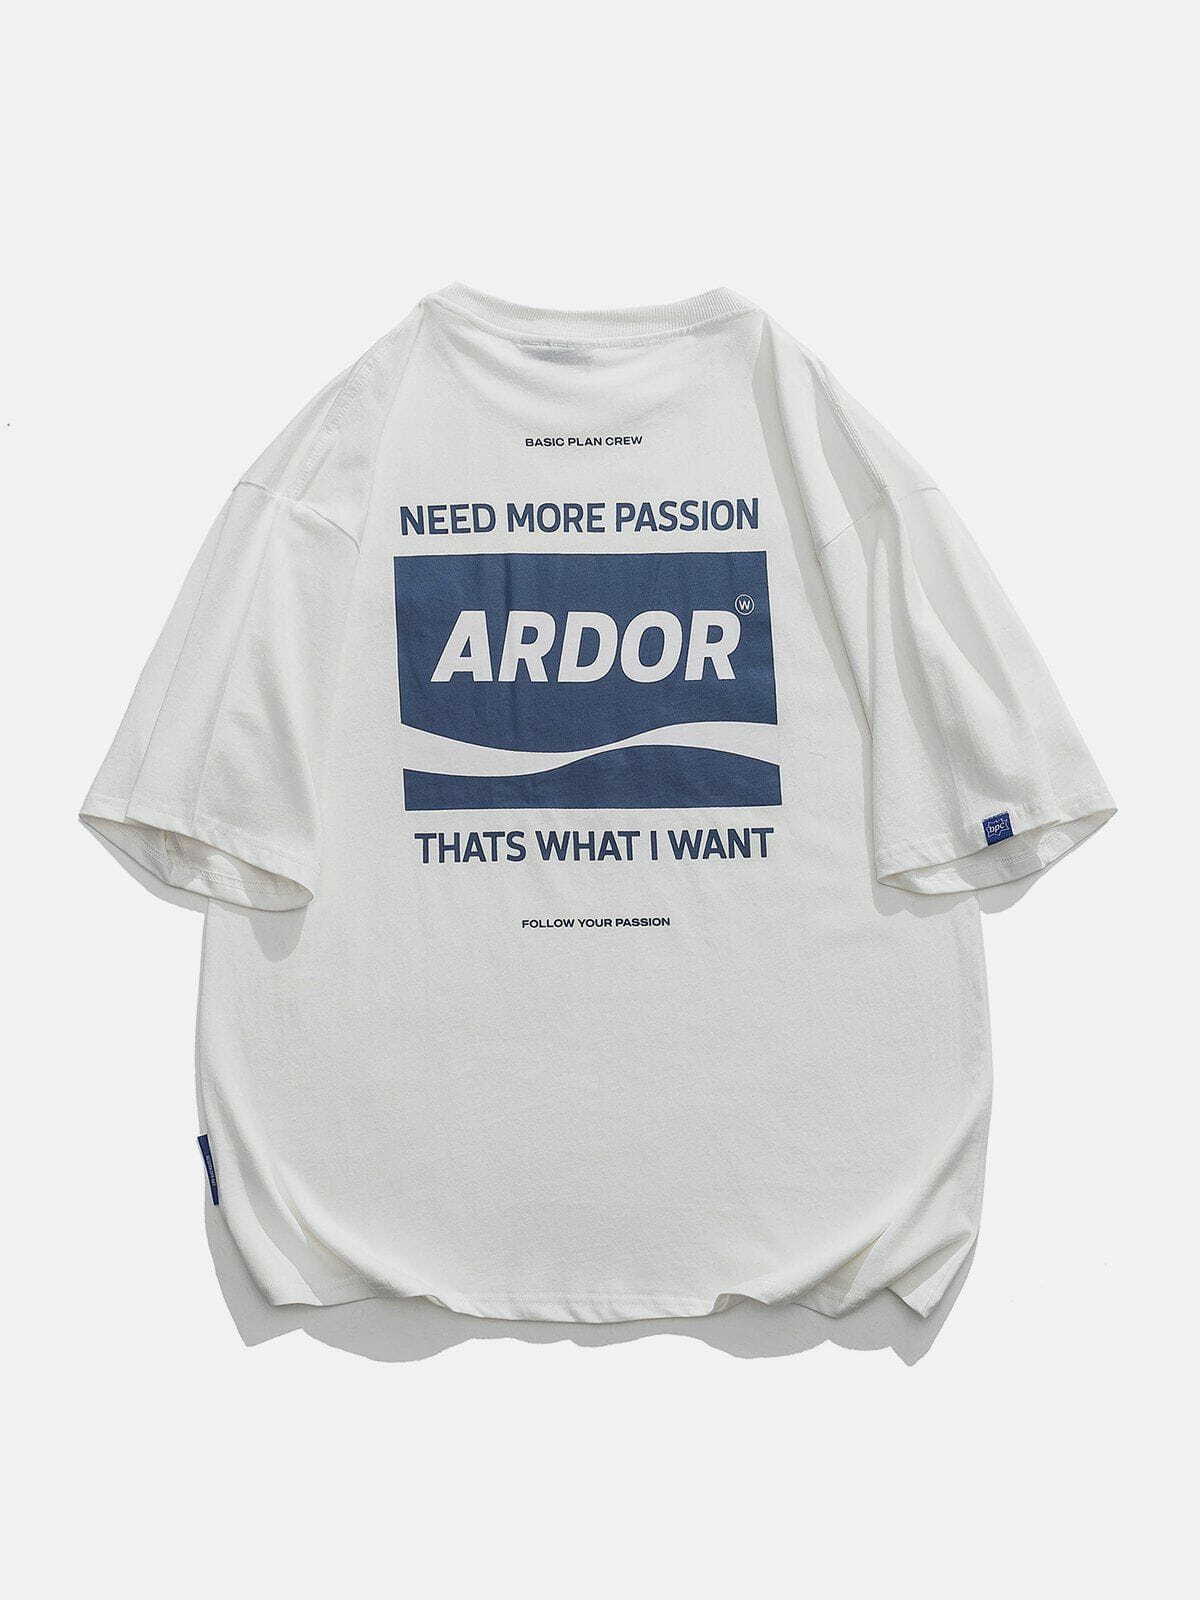 ardor print tee   youthful & bold streetwear essential 2002